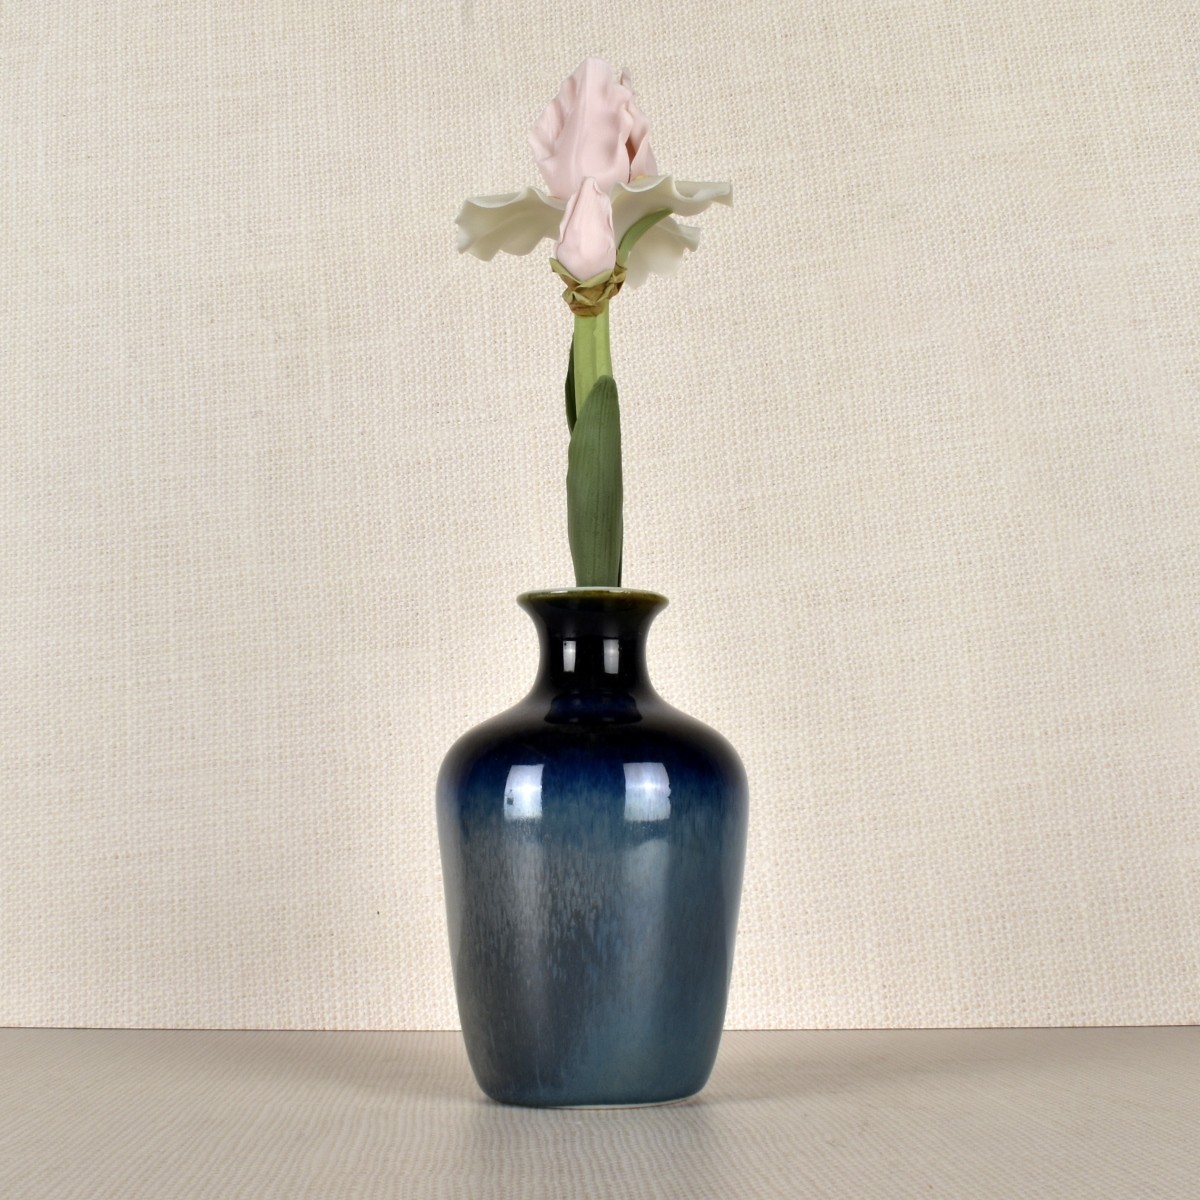 Lladro Porcelain Vase Figurines